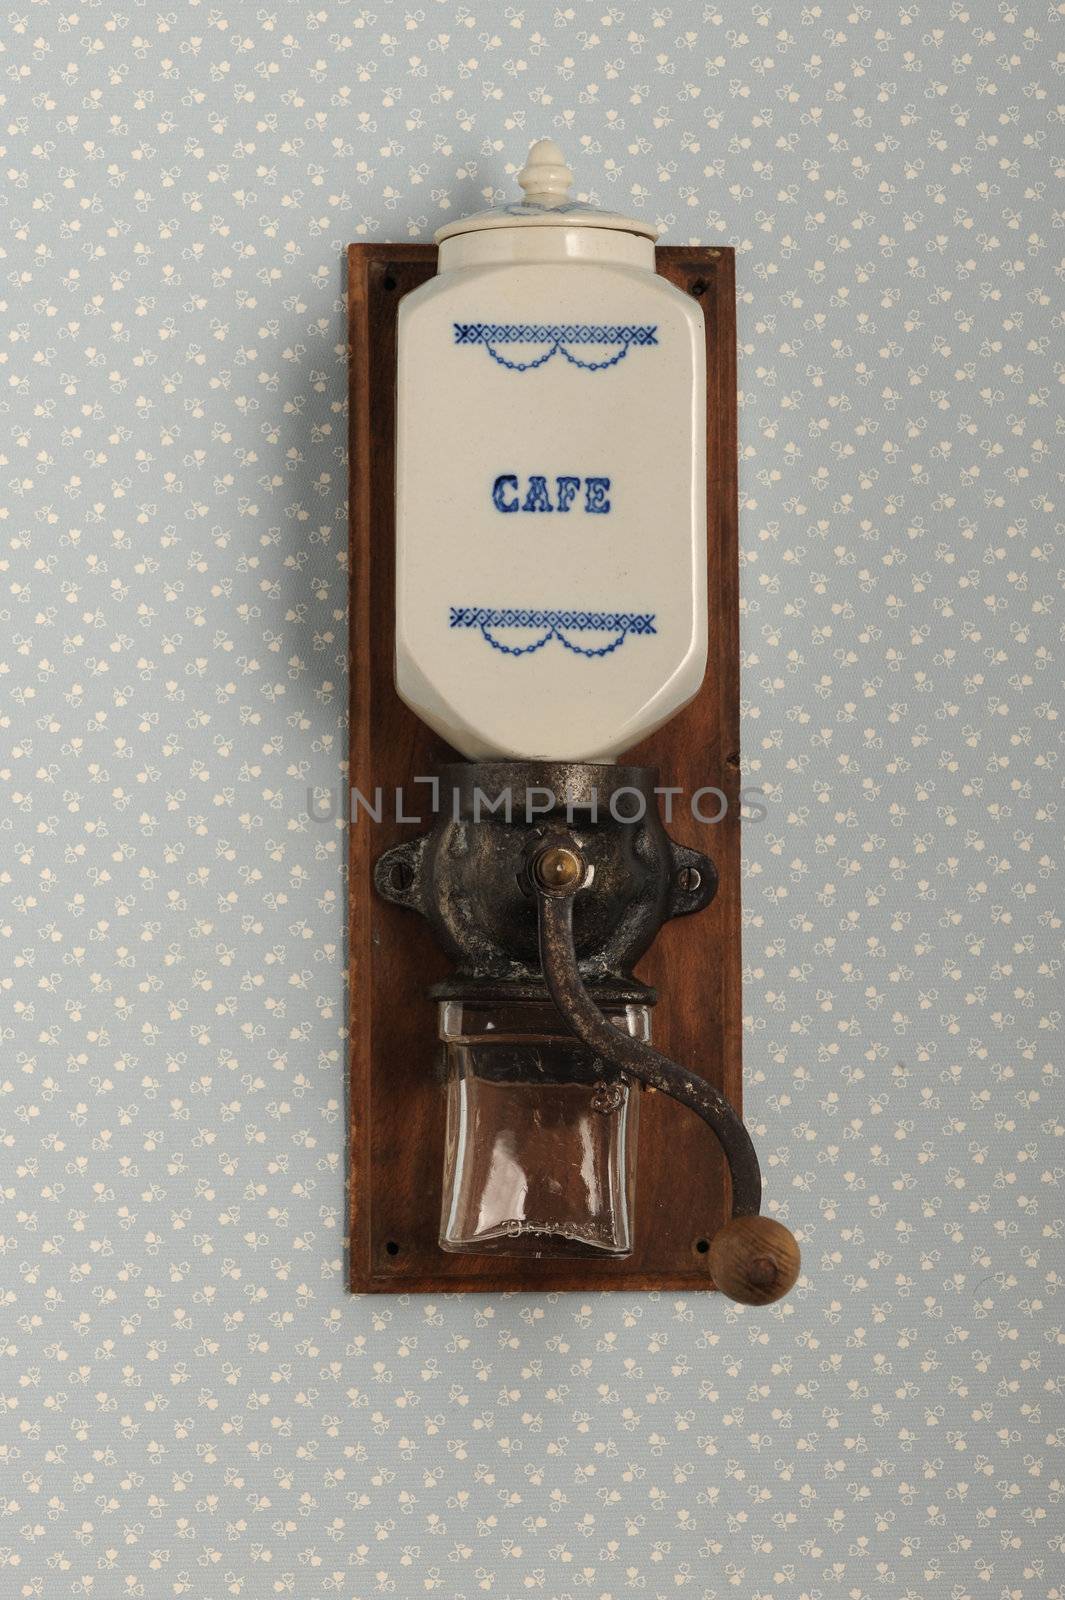 Coffee grinder on vintage background